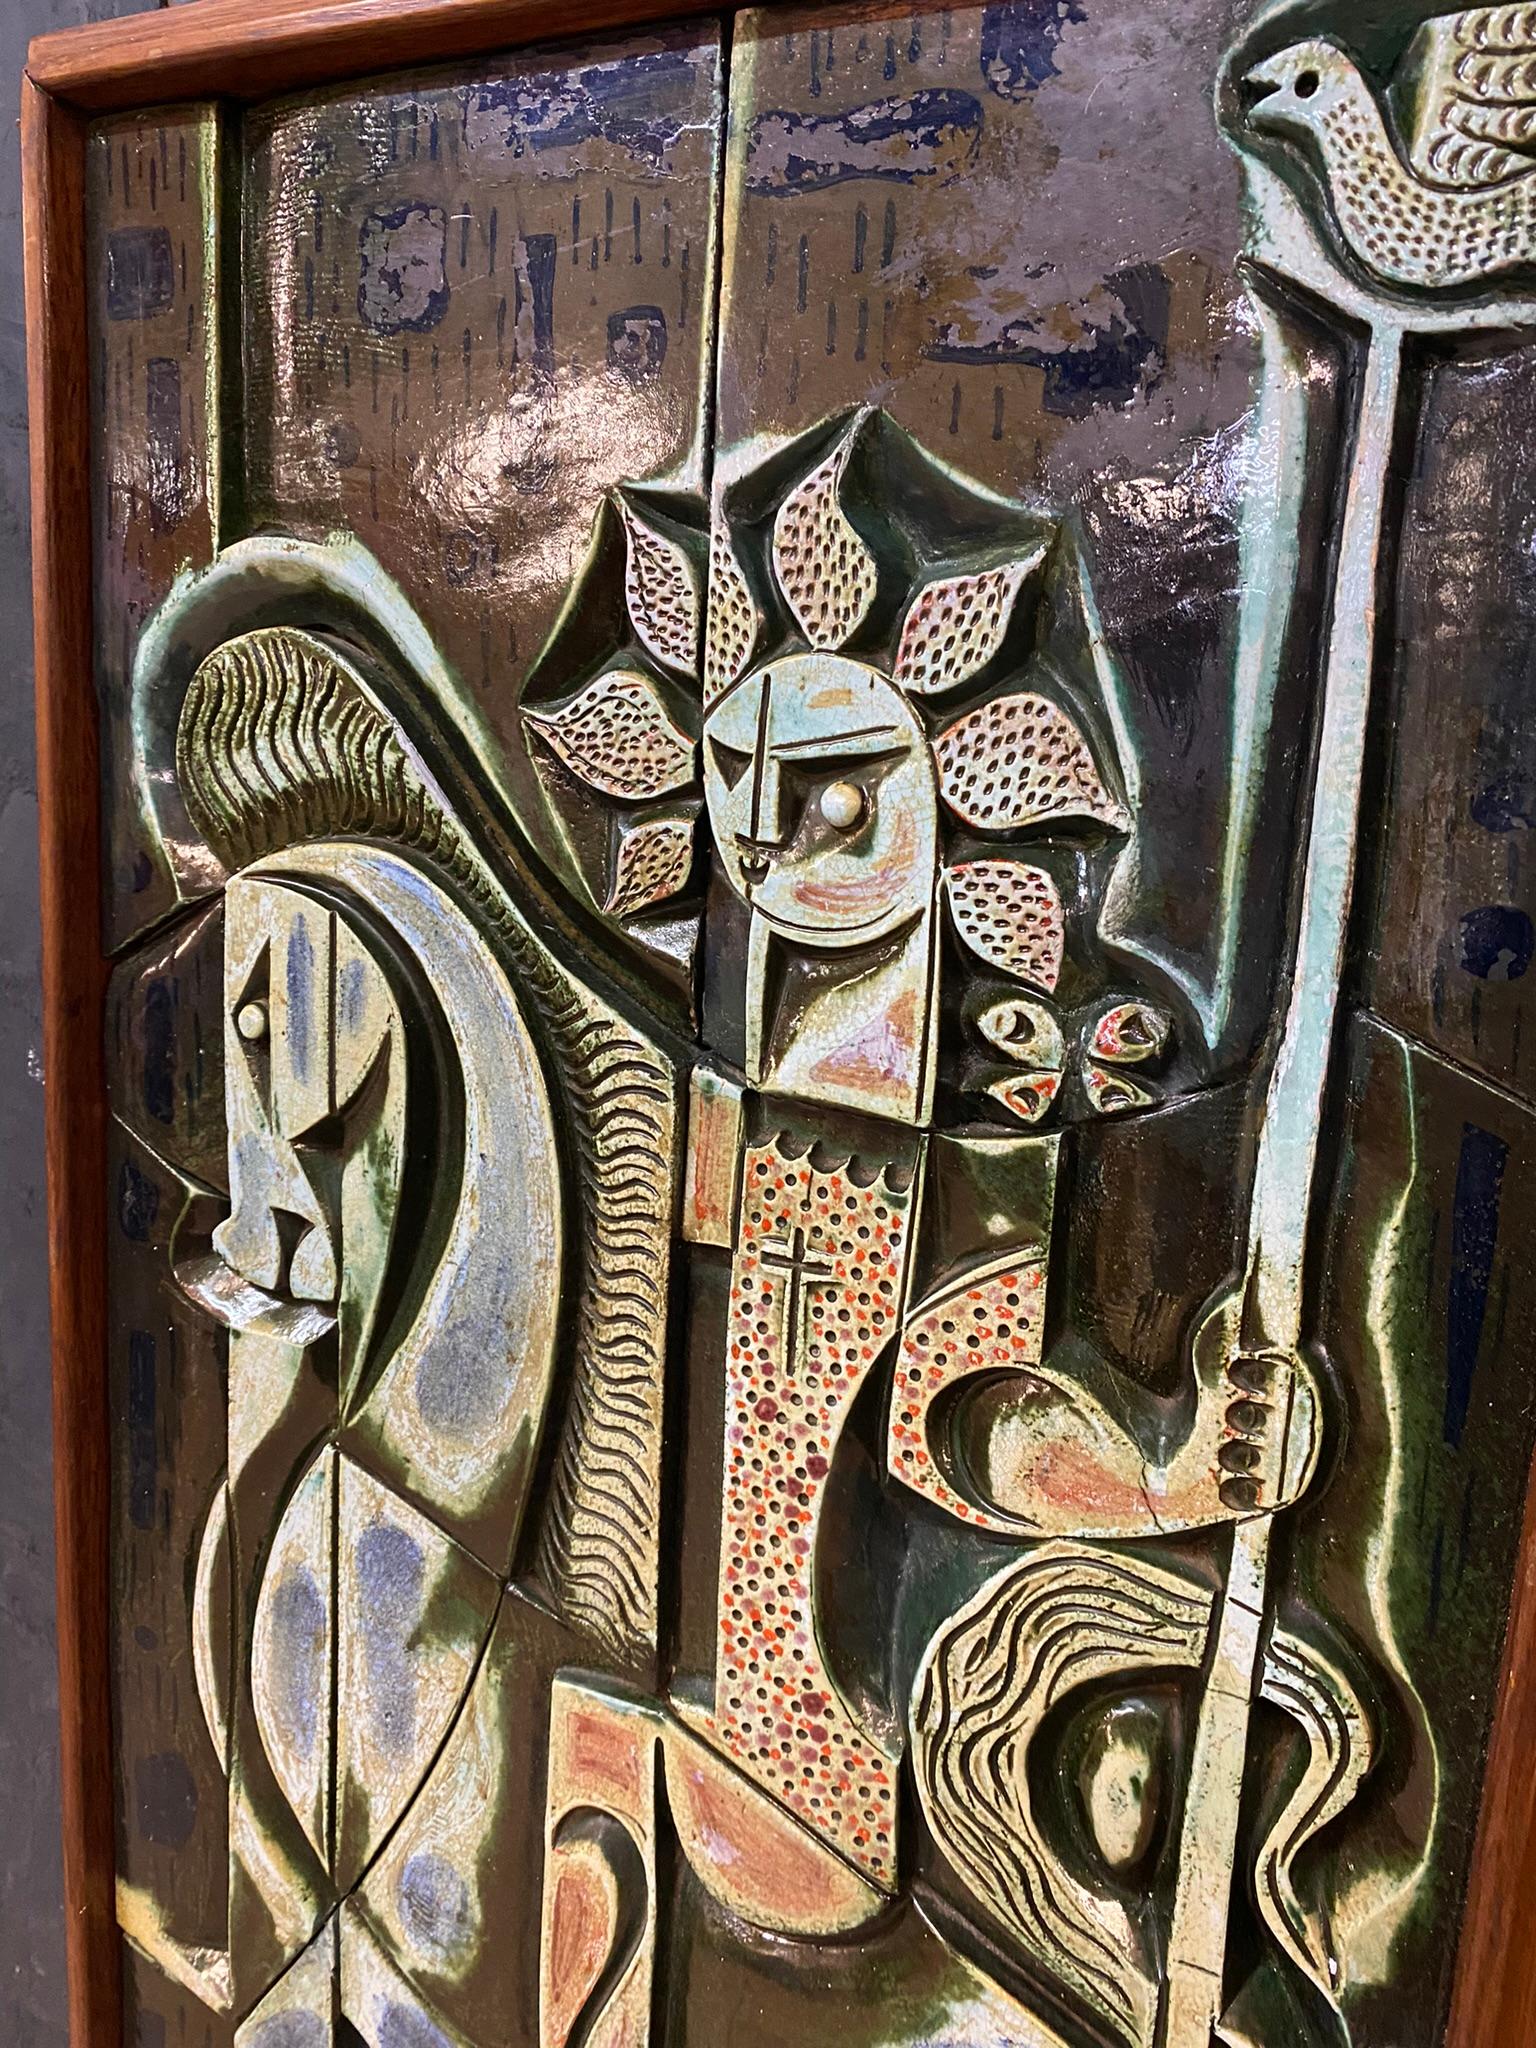 Boleslaw Danikowski Large Ceramic Panel in a Wooden Frame, circa 1950 For Sale 4